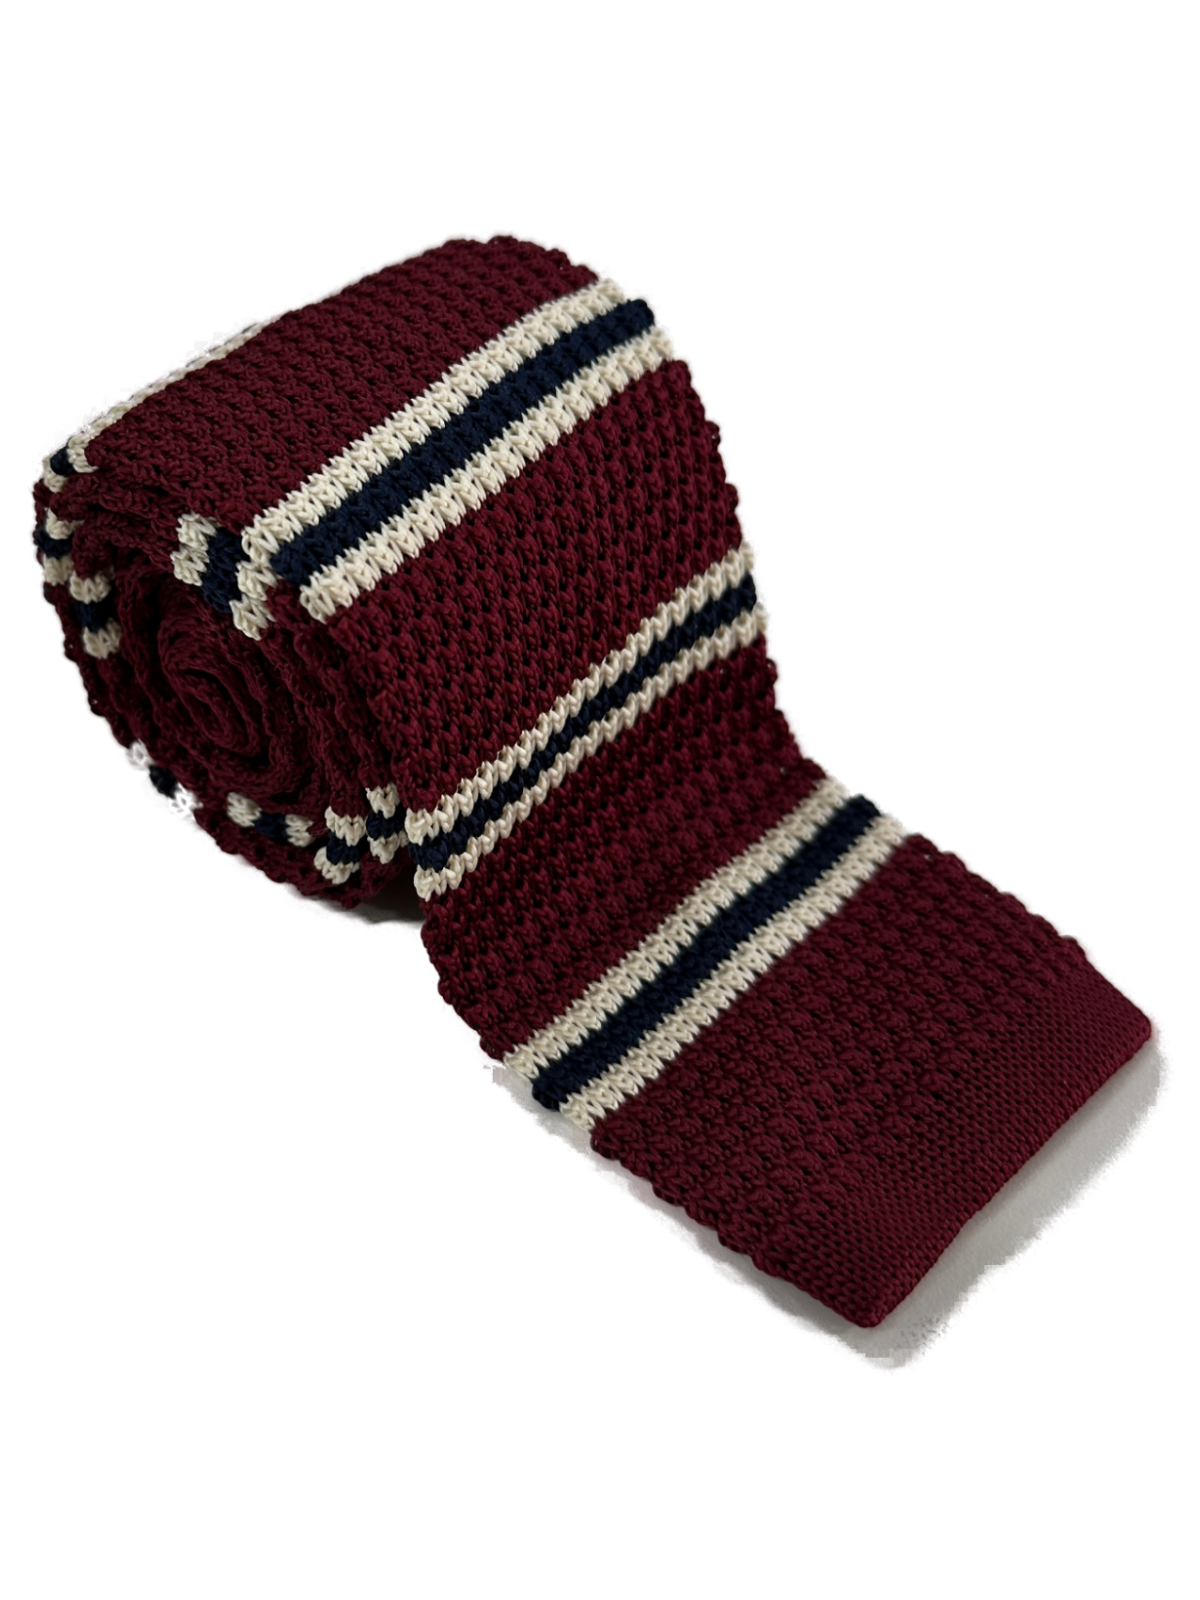 Ivy knited tie - Red &amp; Navy